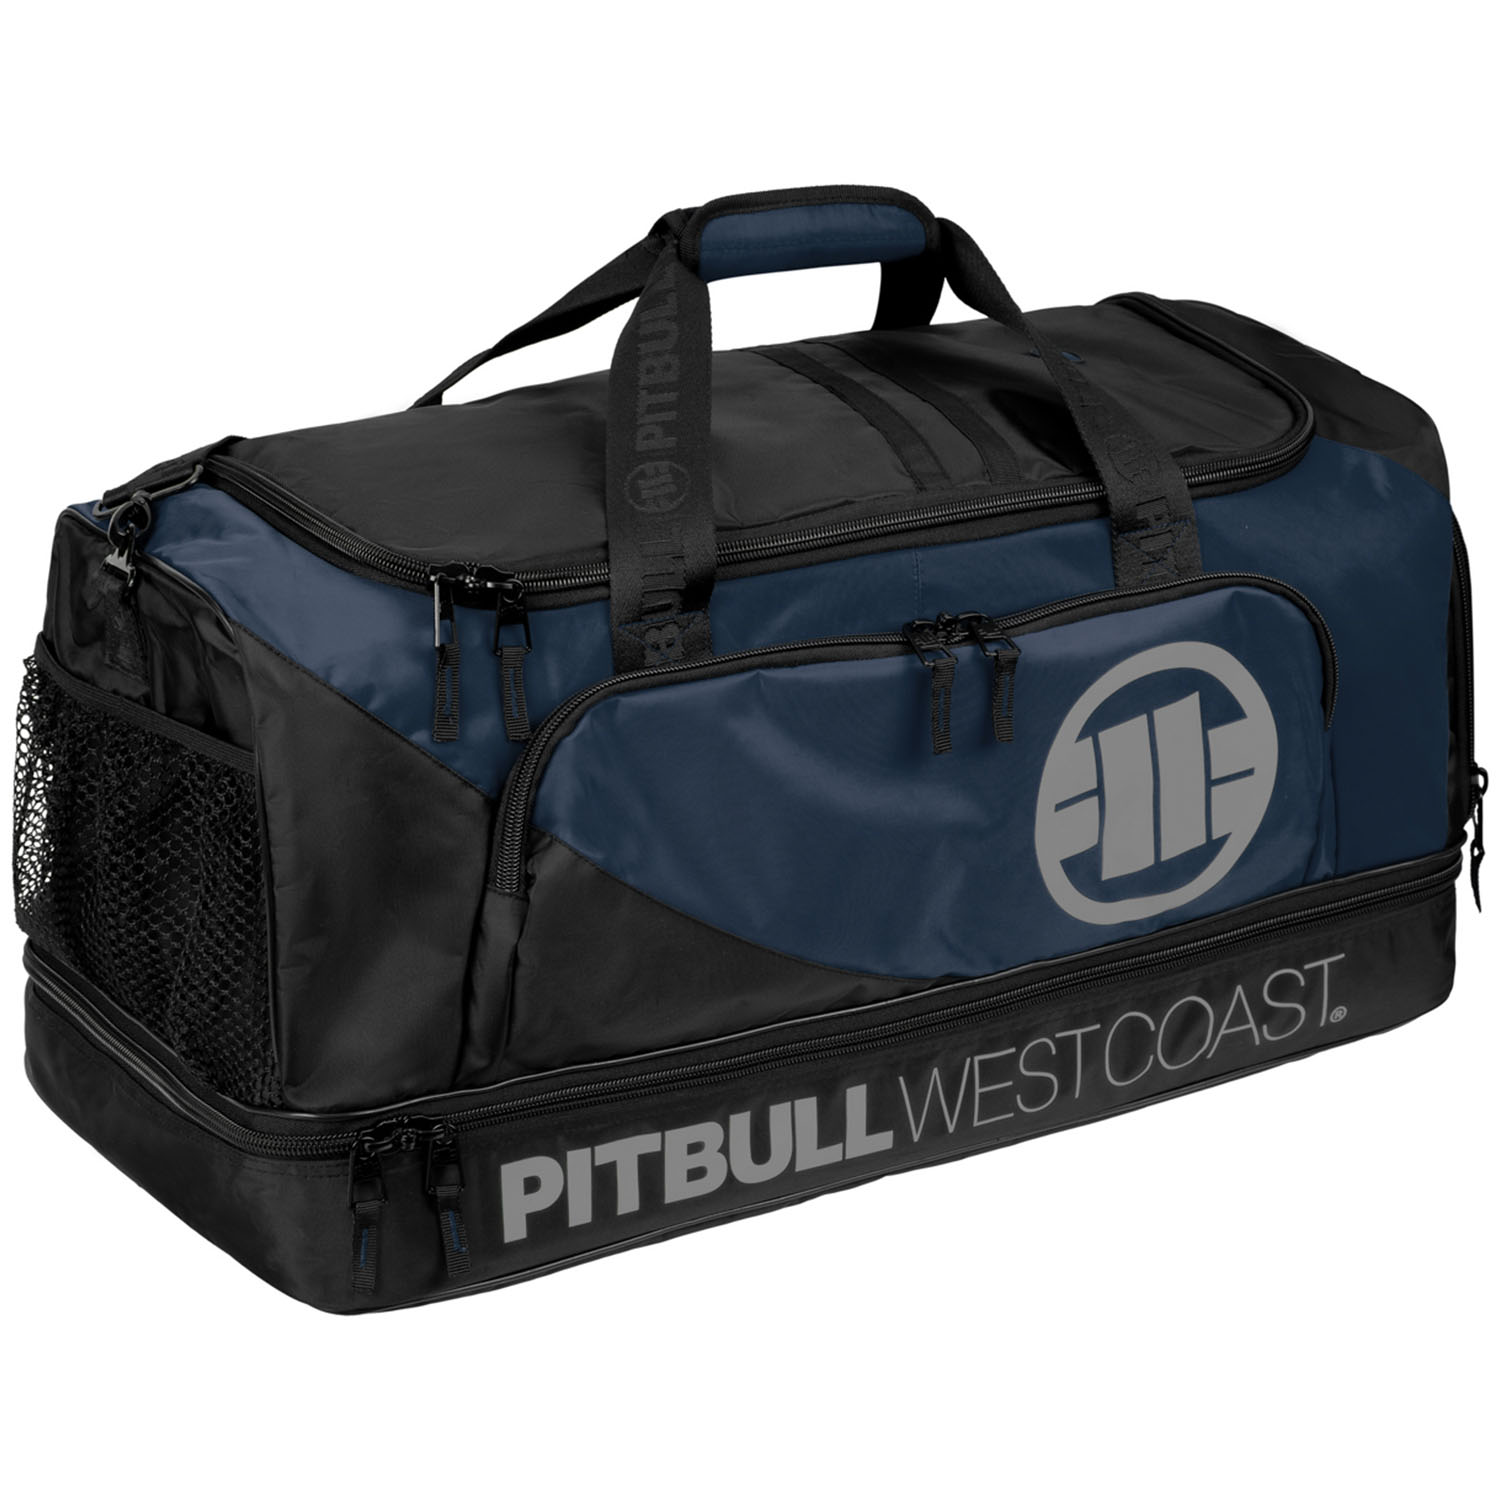 Pit Bull West Coast, Sport Bag, Big Duffle Bag, Logo TNT, black-navy